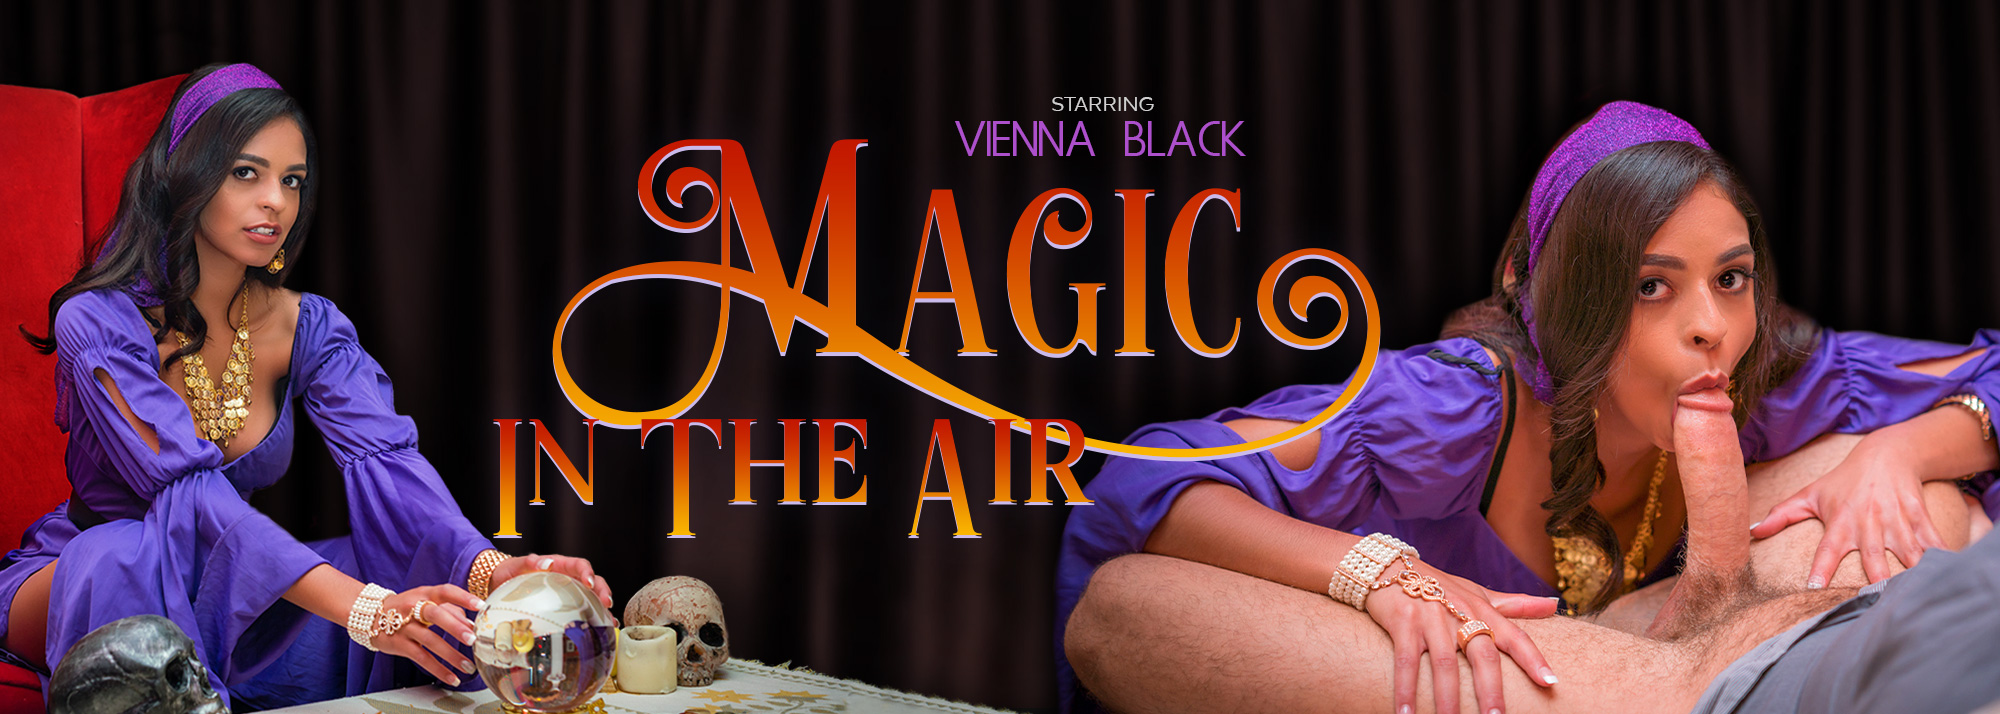 Magic In The Air - VR Video, Starring: Vienna Black